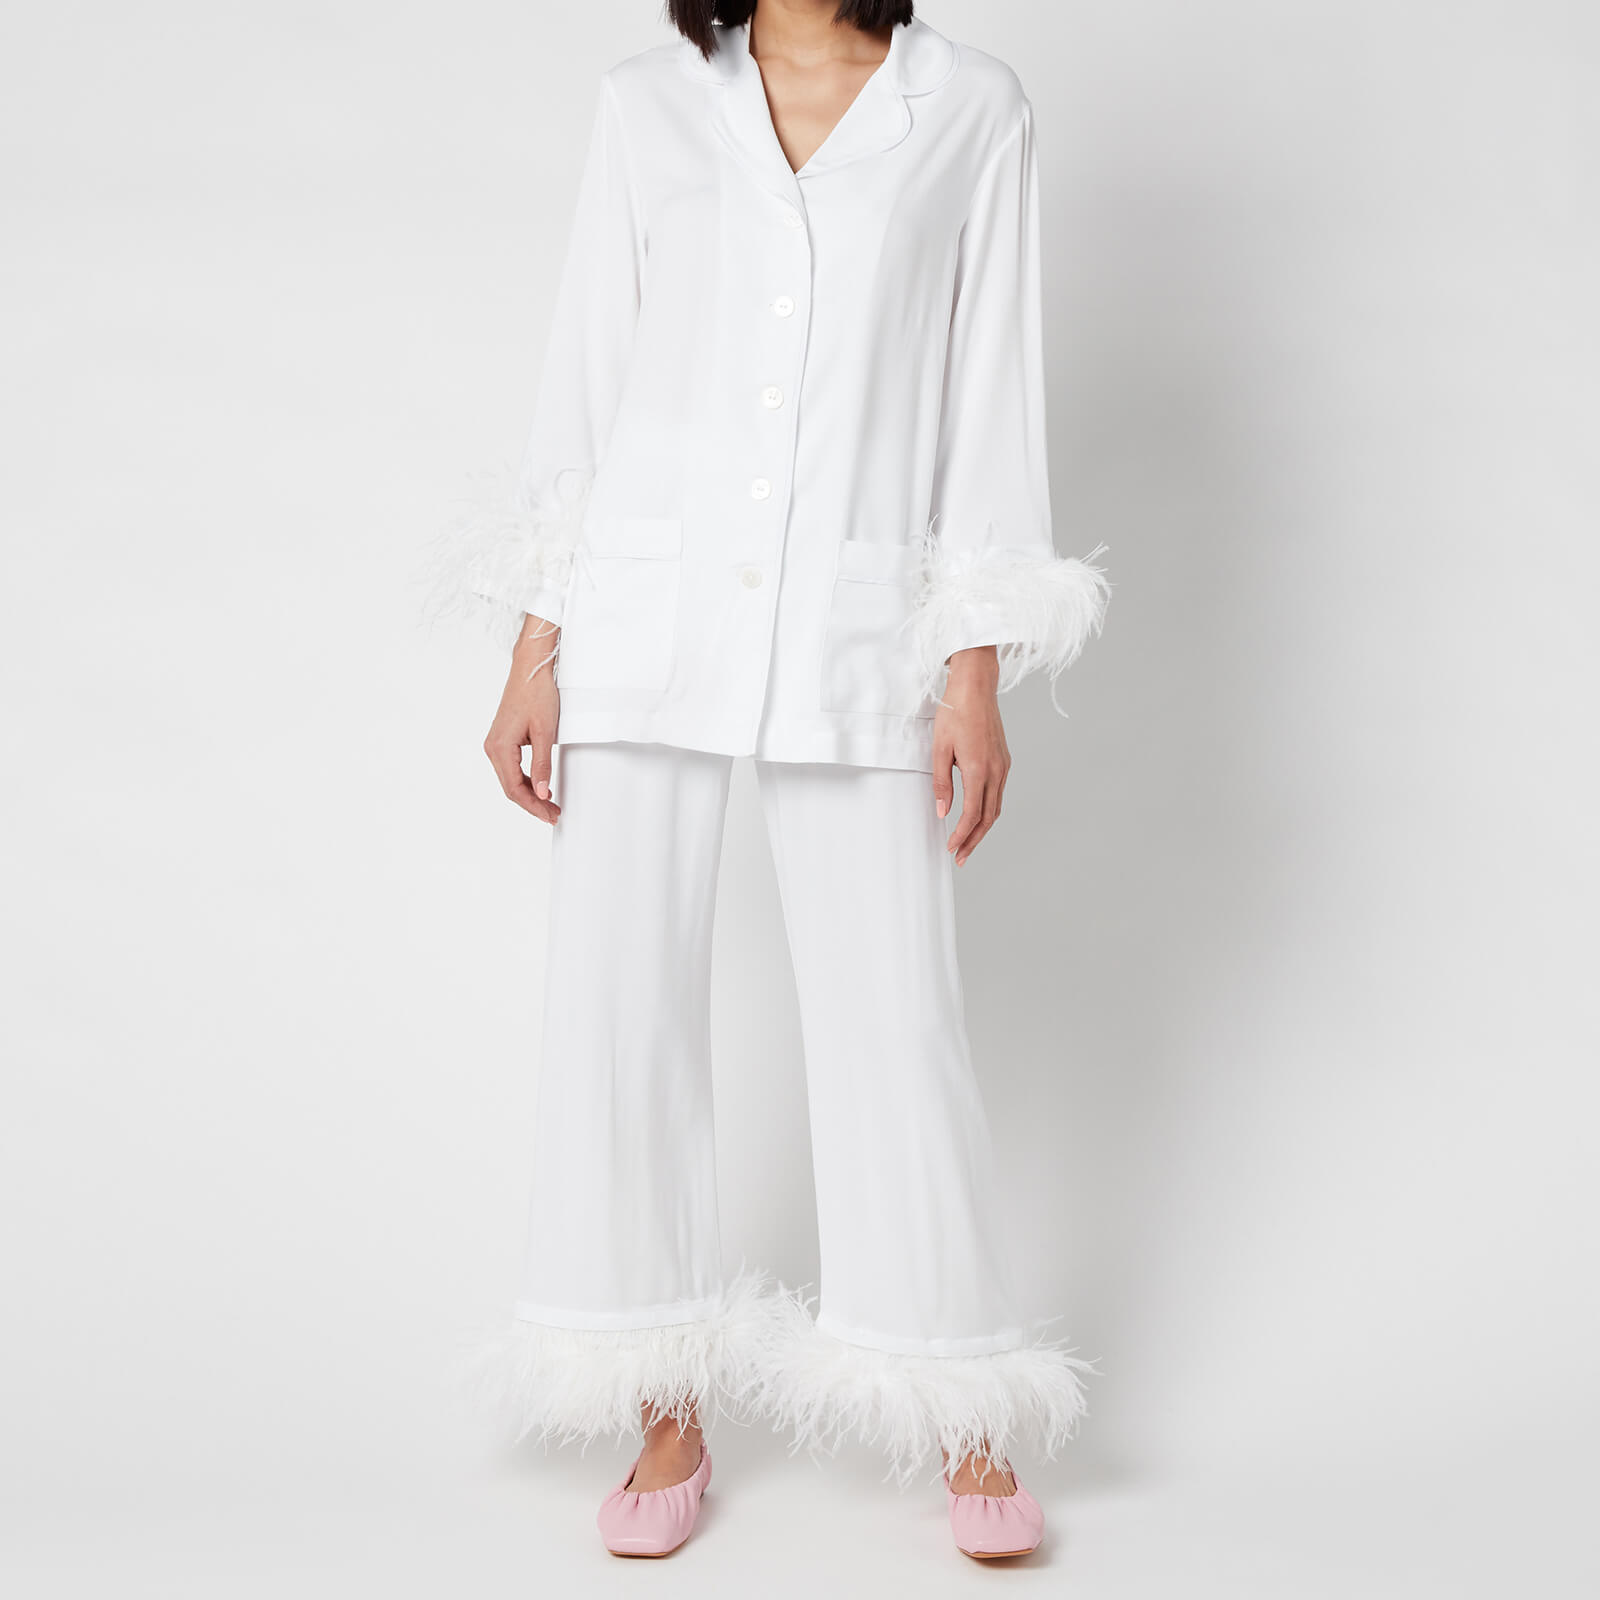 Sleeper Women's Party Pyjama Set with Double Feathers - White - XS